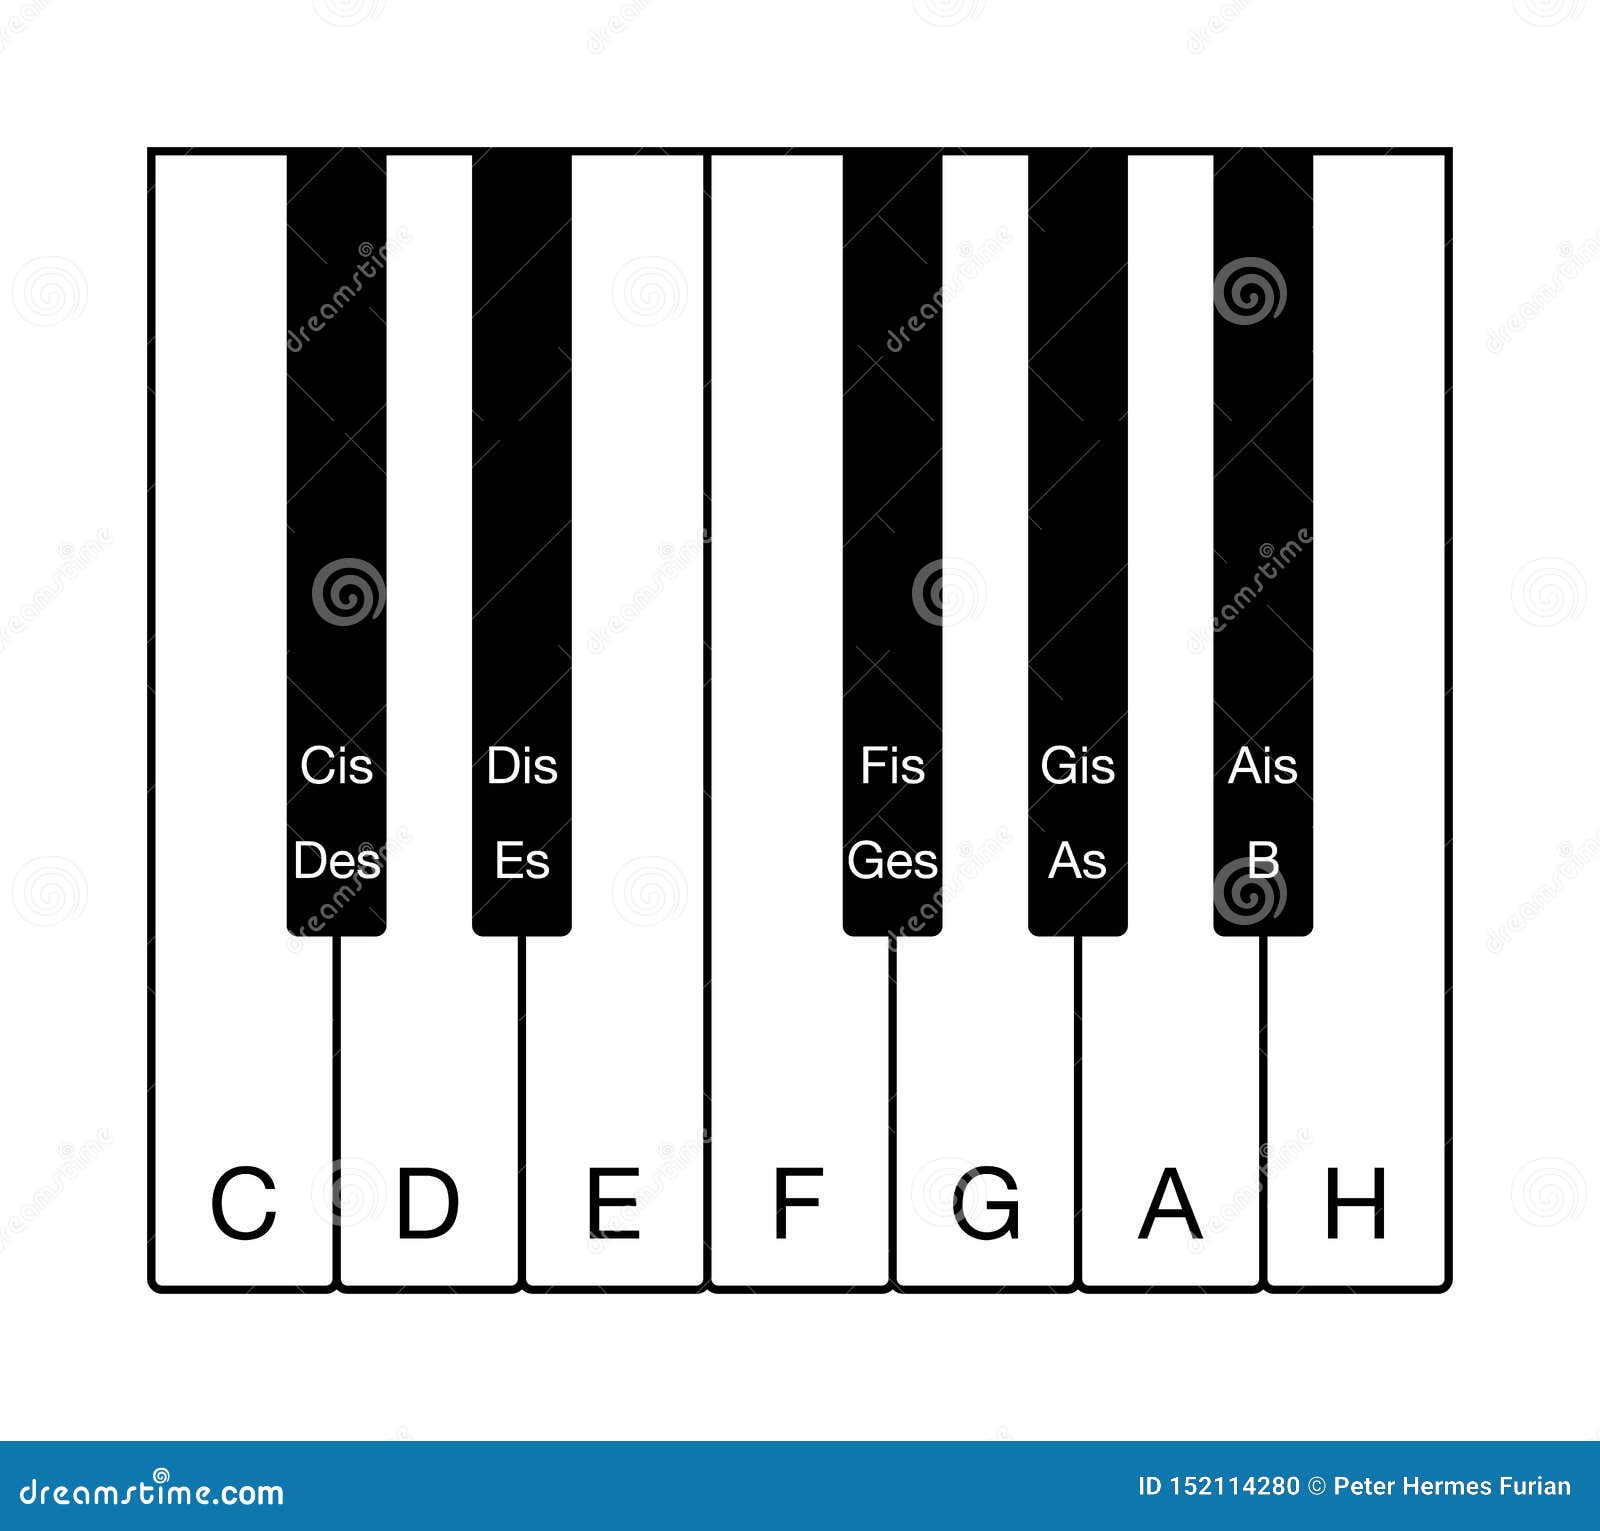 german chromatic scale on musical keyboard